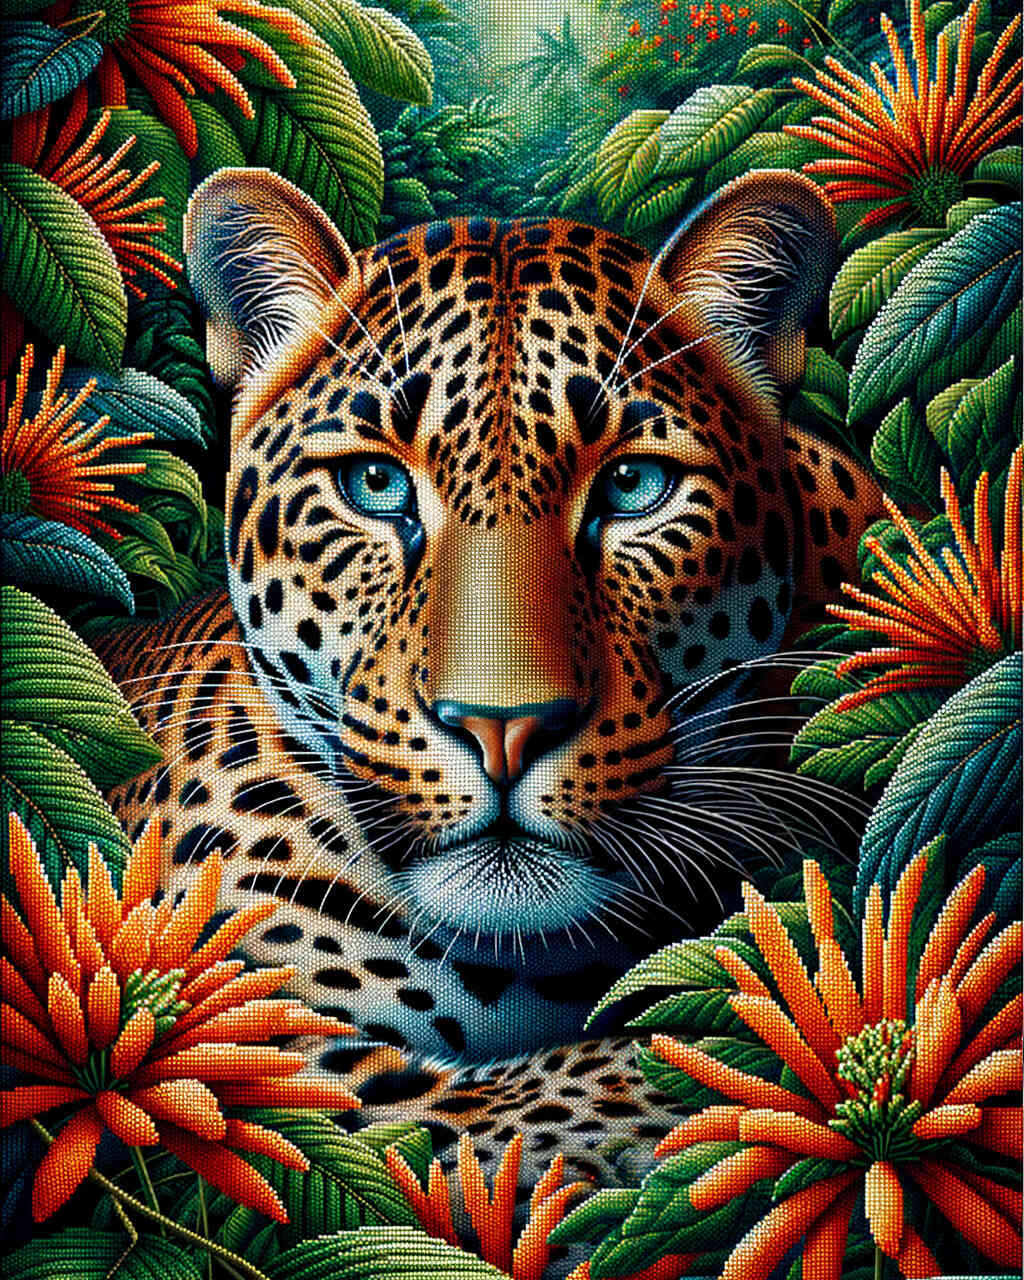 Diamond Painting - Leopard bedeckt sich